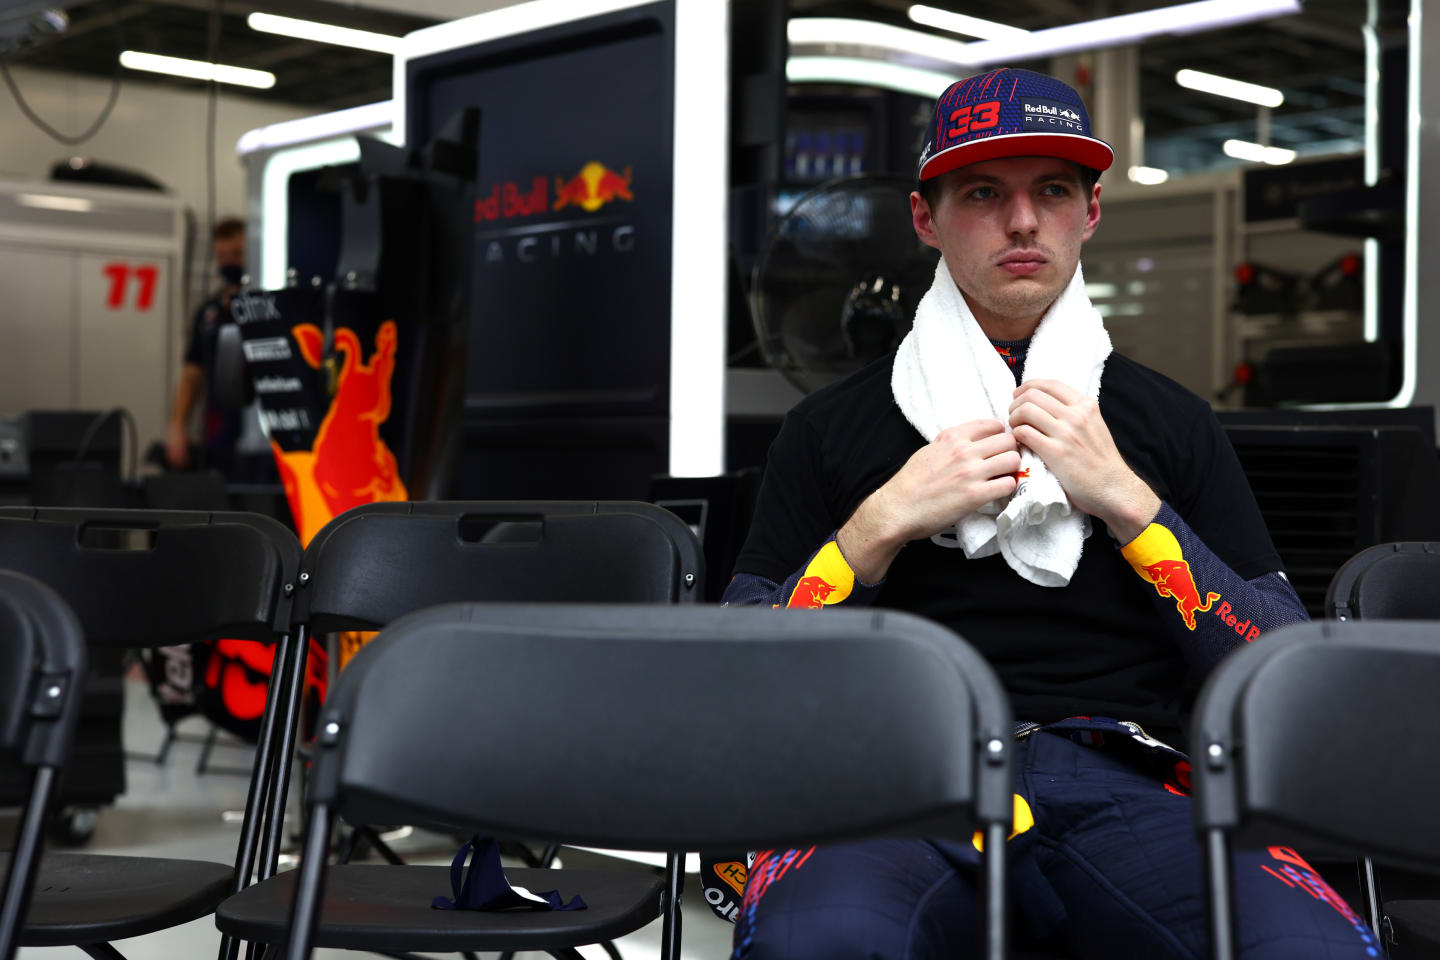 JEDDAH, SAUDI ARABIA - DECEMBER 05: Max Verstappen of Netherlands and Red Bull Racing prepares to